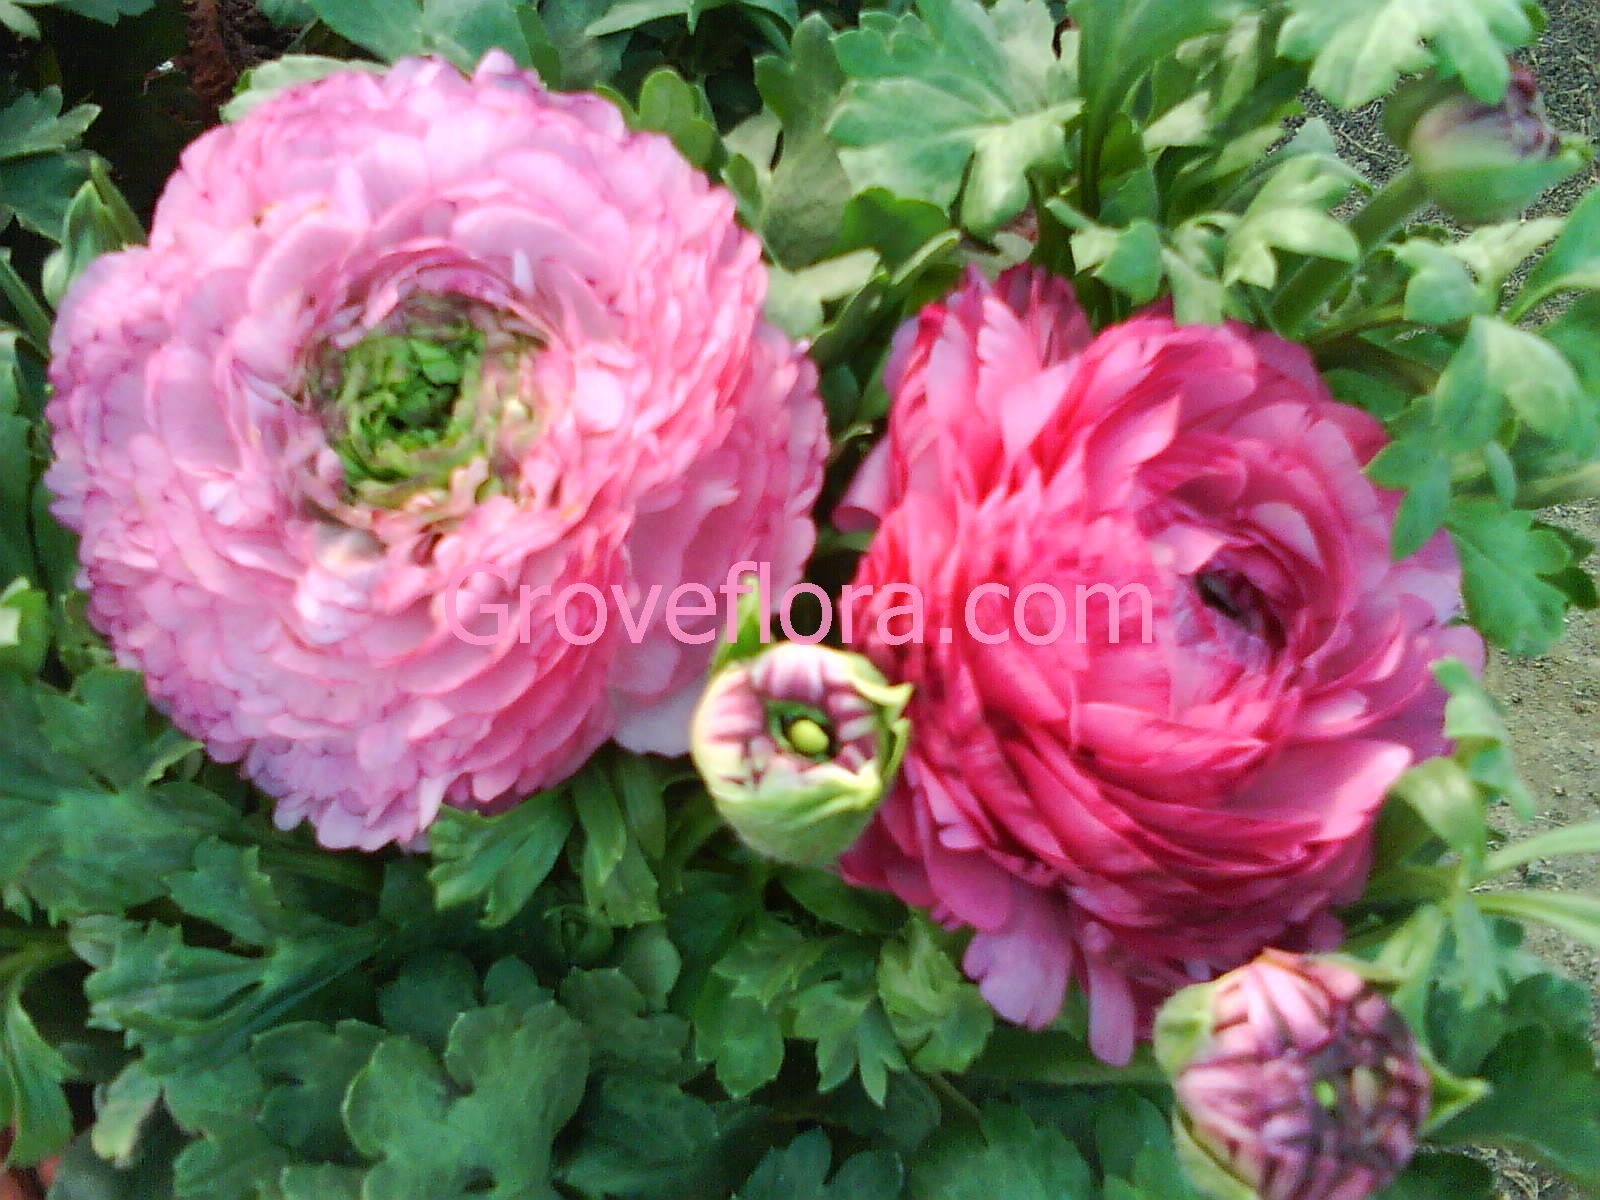 groveflora online gardening supplies india, buy flower bulbs